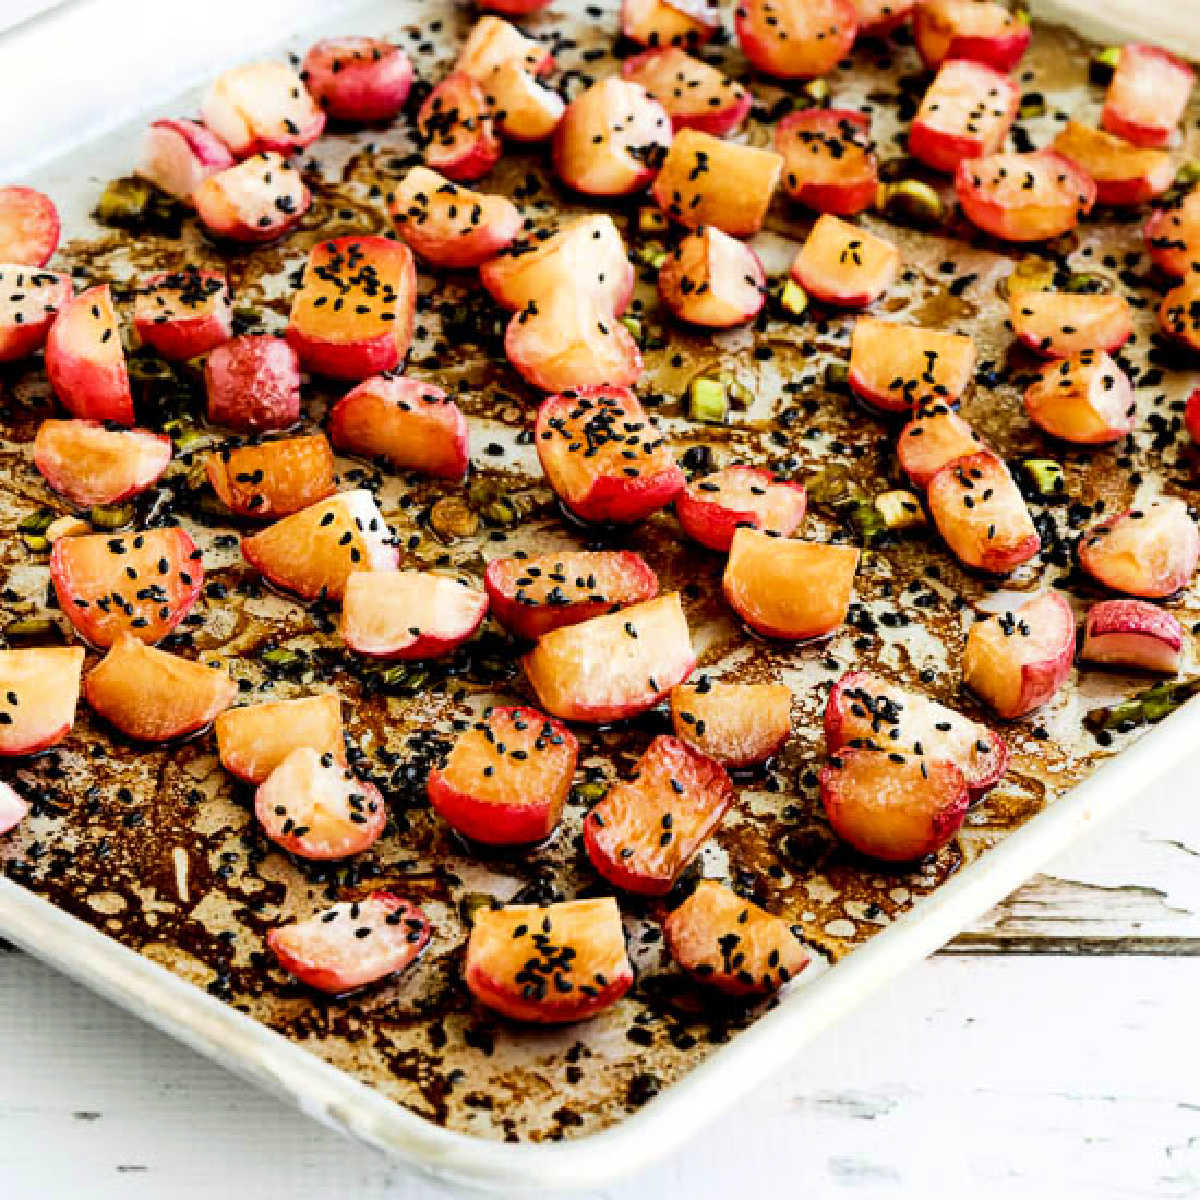 Square image of Roasted Radishes on baking sheet with sesame seeds sprinkled over.